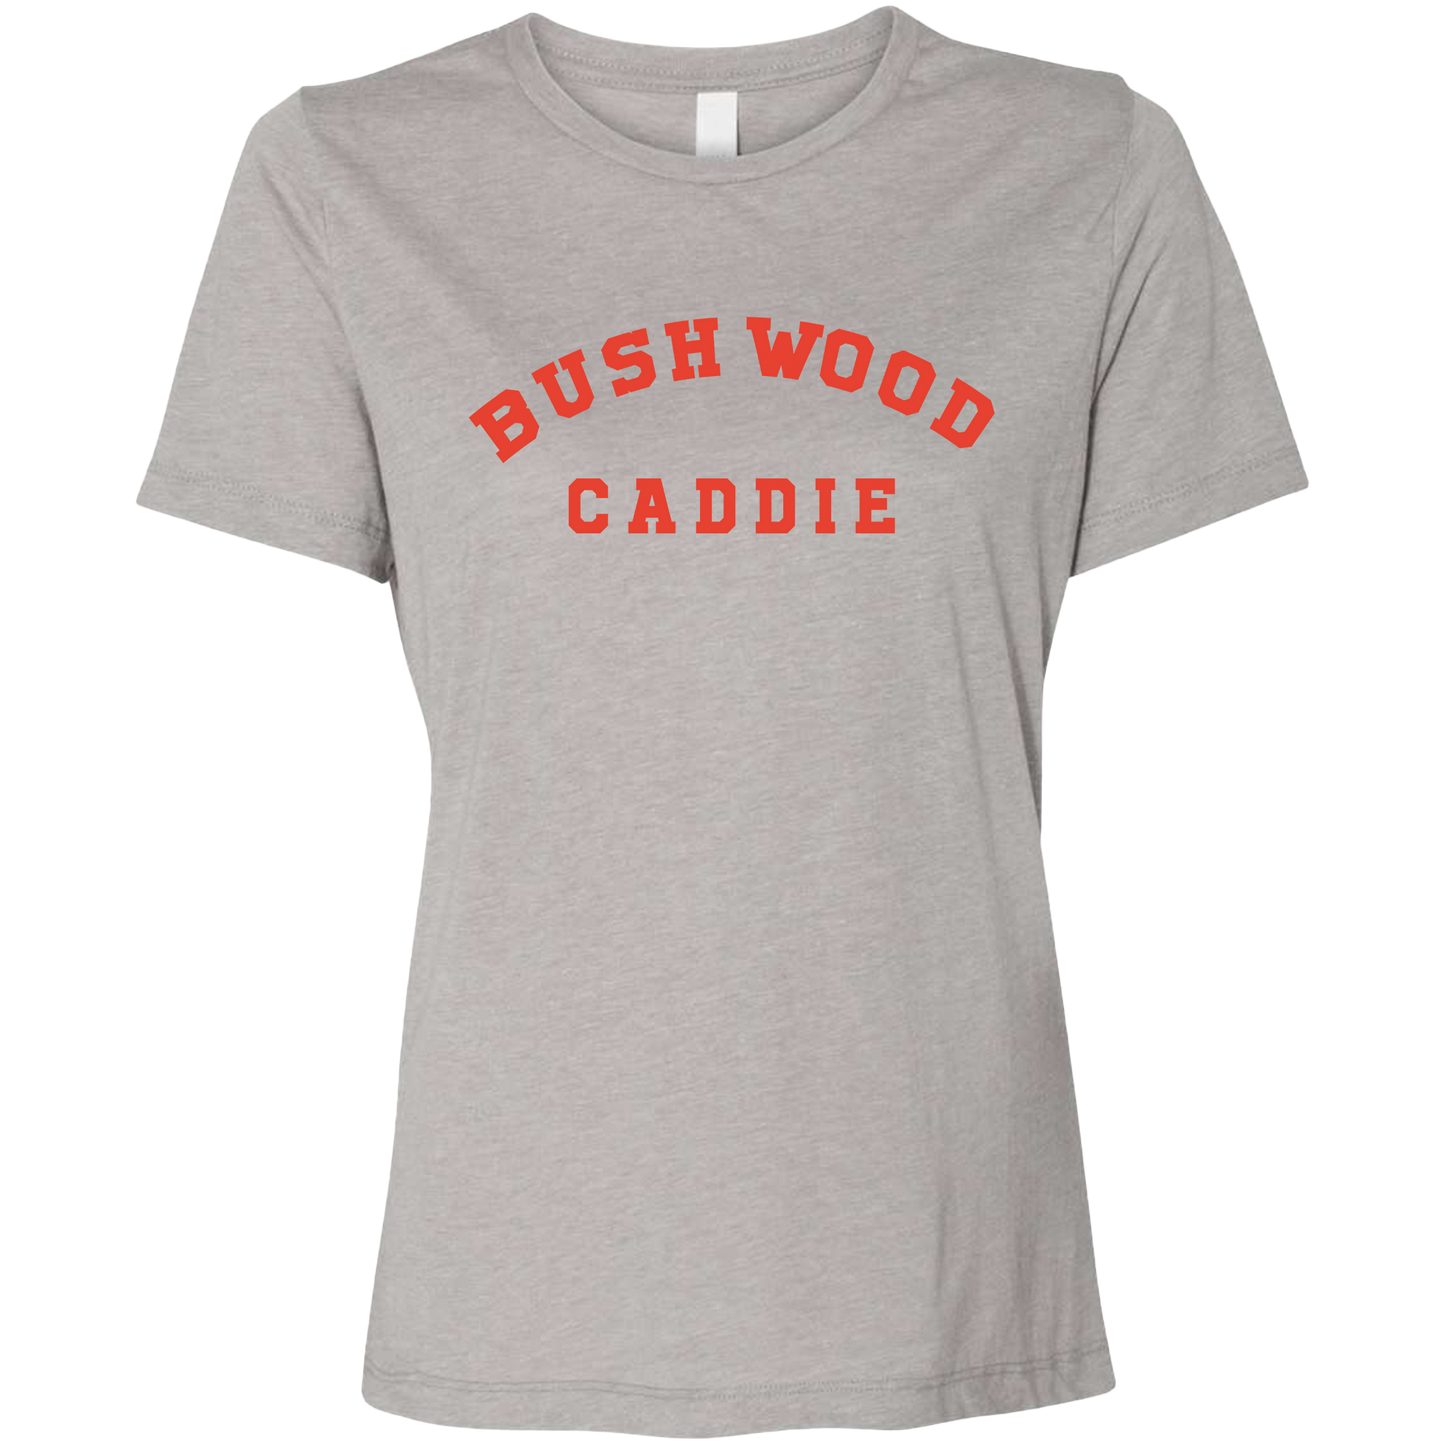 Golf Bushwood Caddie Women's T-Shirt SwingJuice